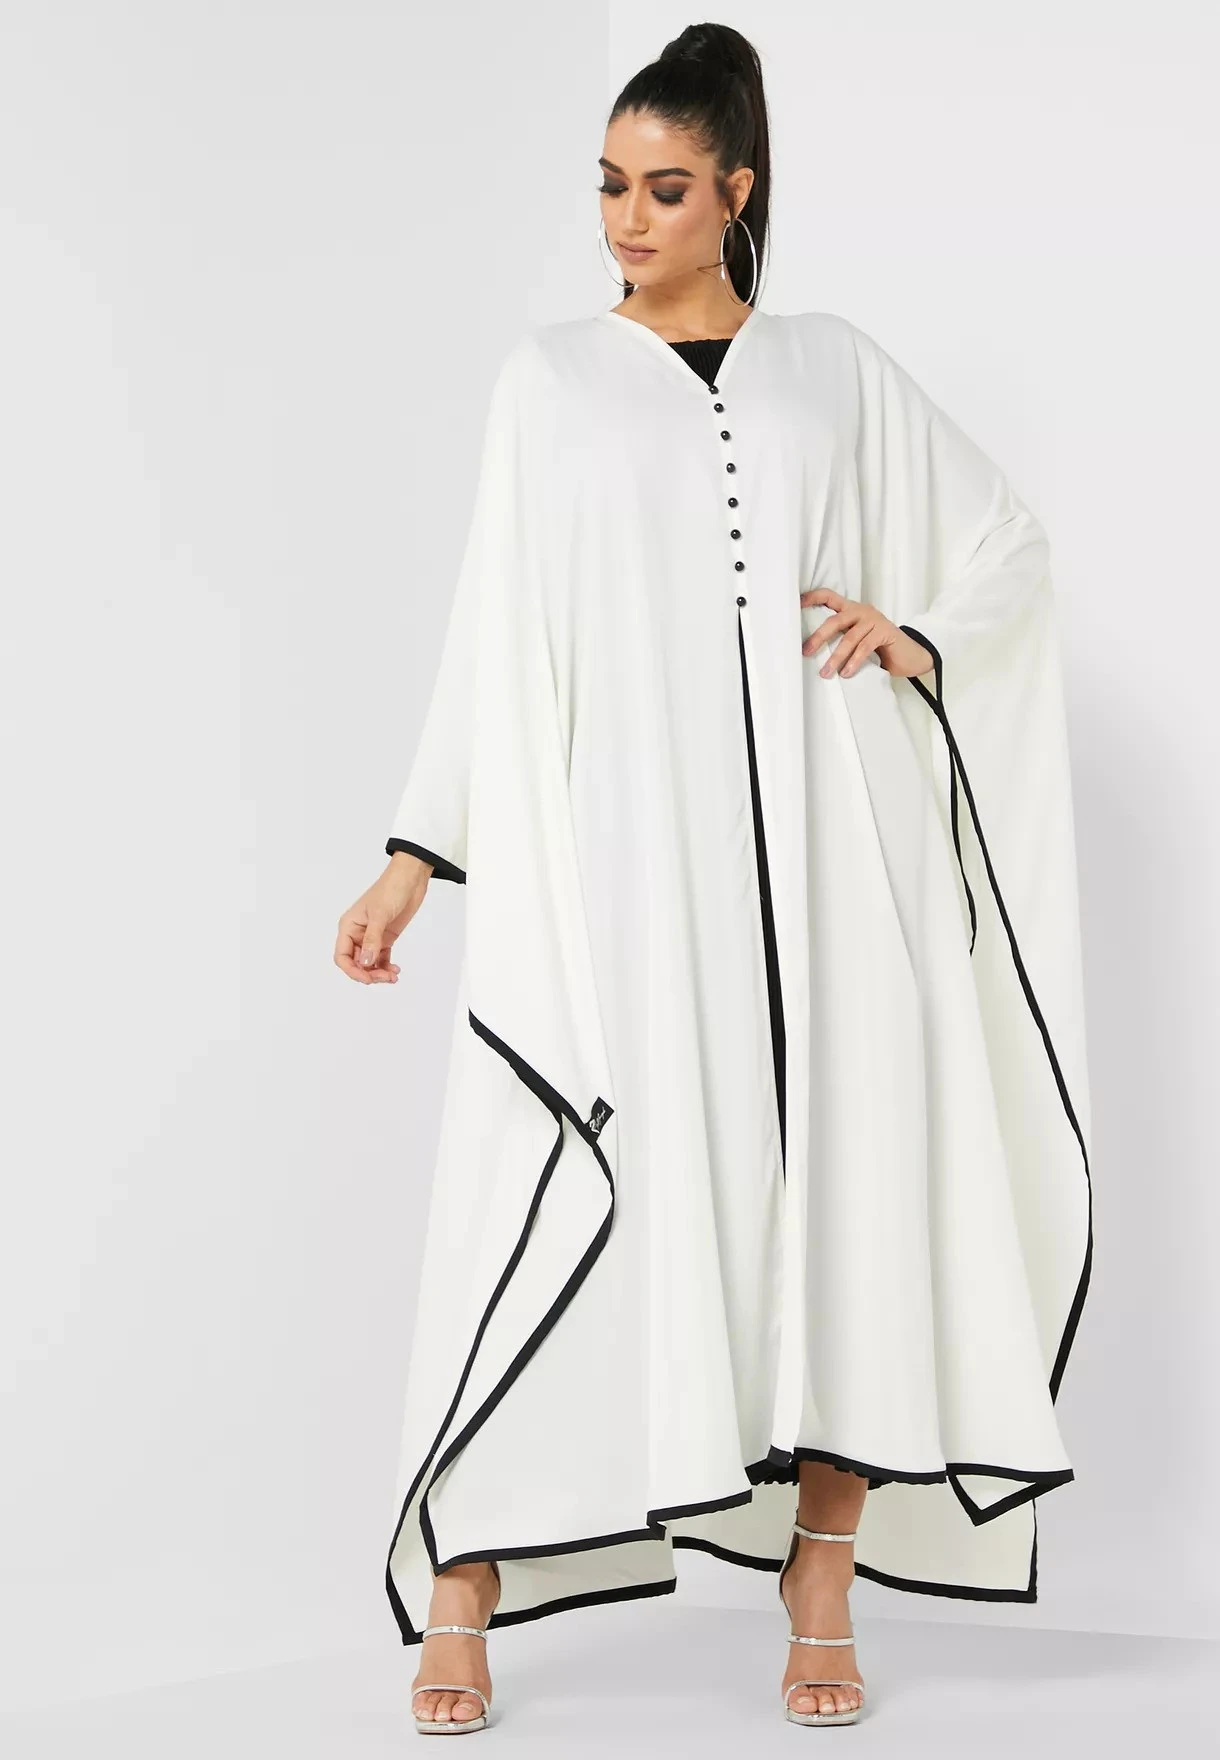 Oem Custom Islamic Dubai High Fashion Plus Size Front Open Black Line Details Batwing Abaya Kimino Kaftans For Muslim Women